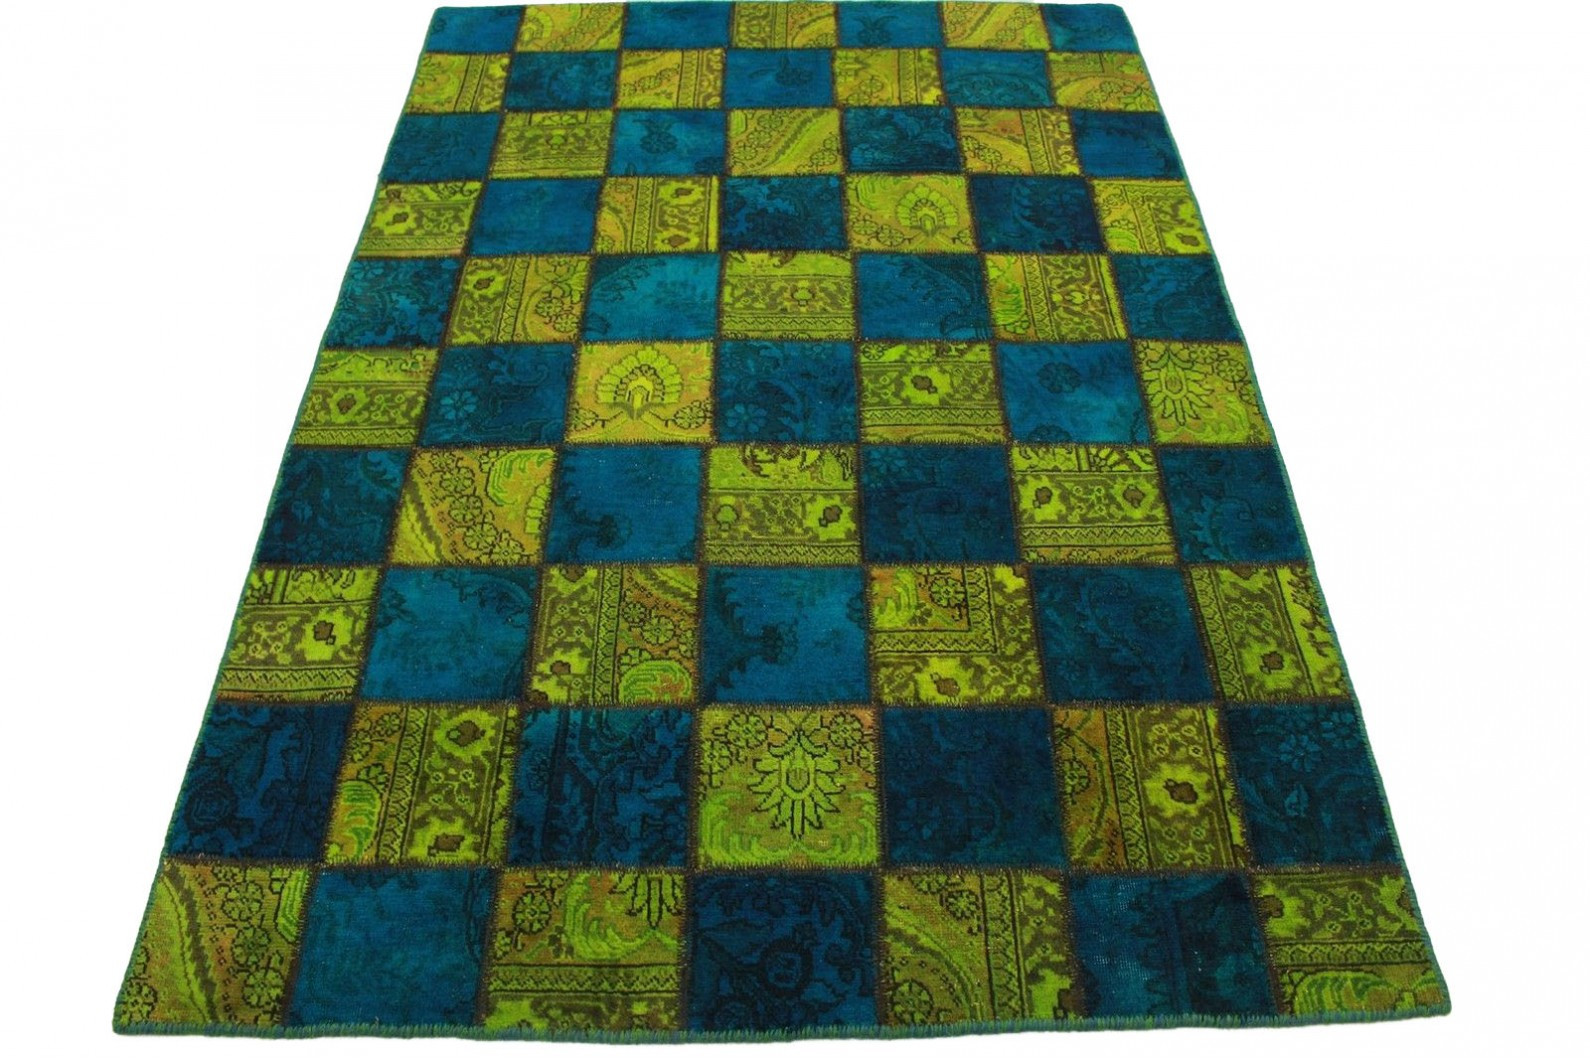 Teppich Grün Blau
 Patchwork Teppich Grün Blau in 200x140cm 1001 1972 bei